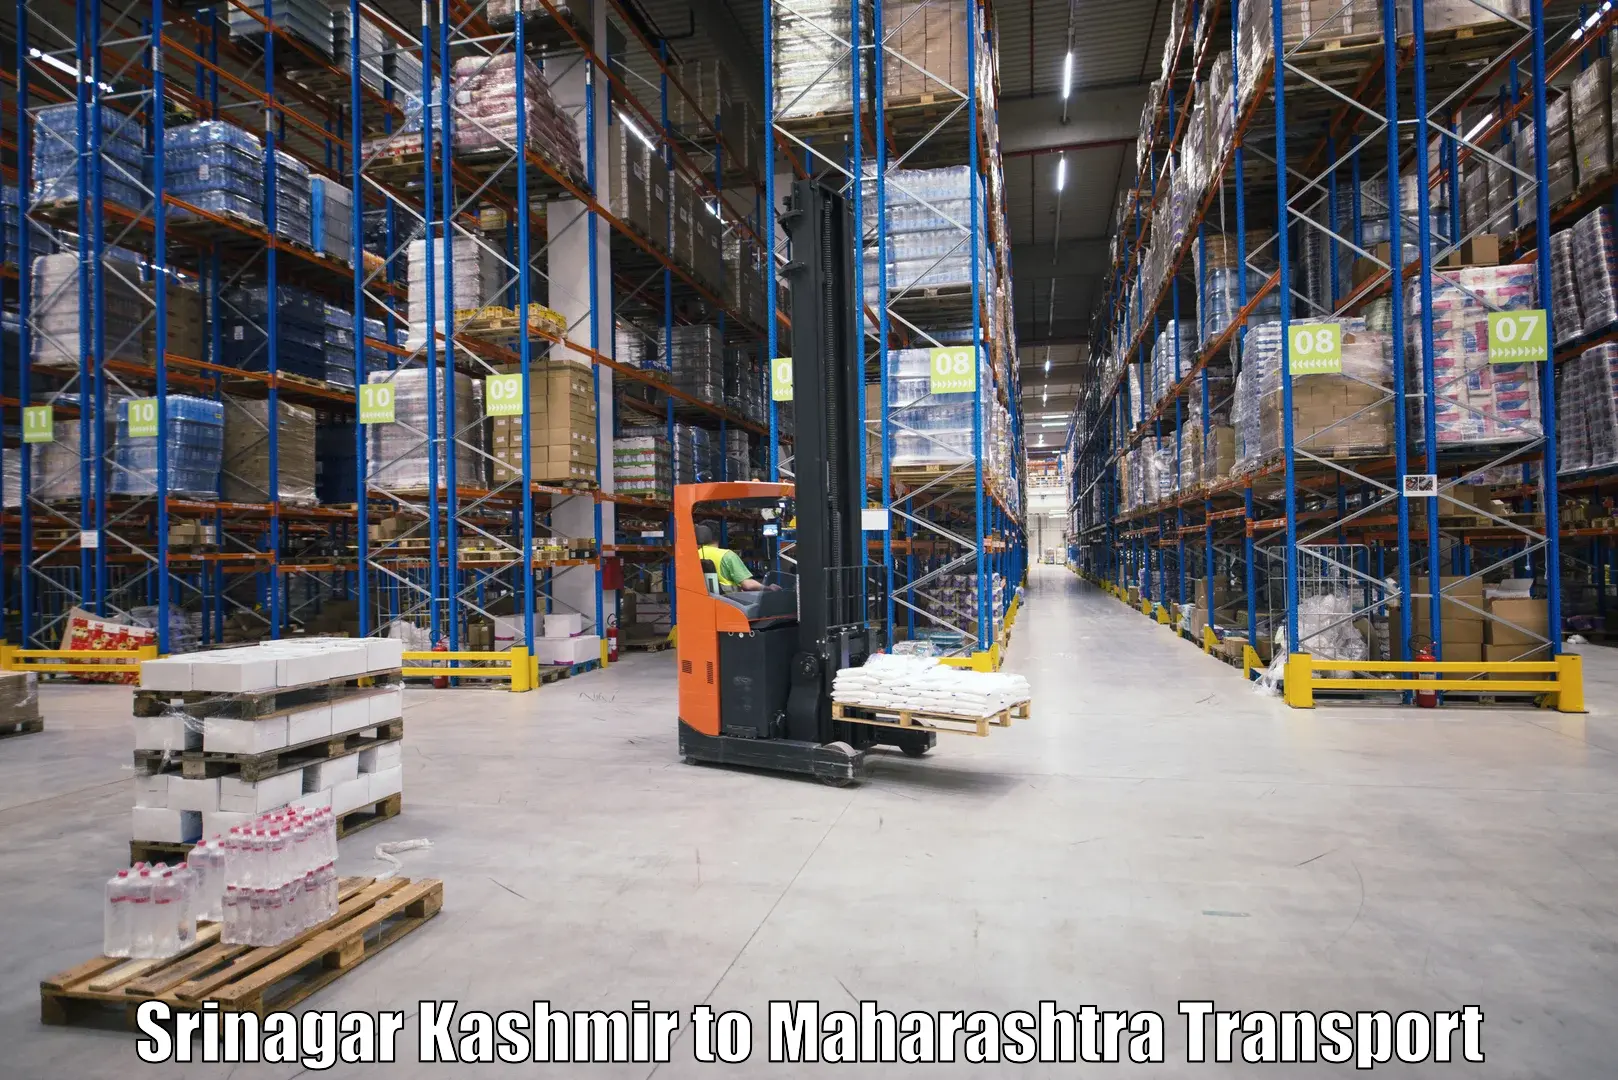 Truck transport companies in India in Srinagar Kashmir to Mumbai